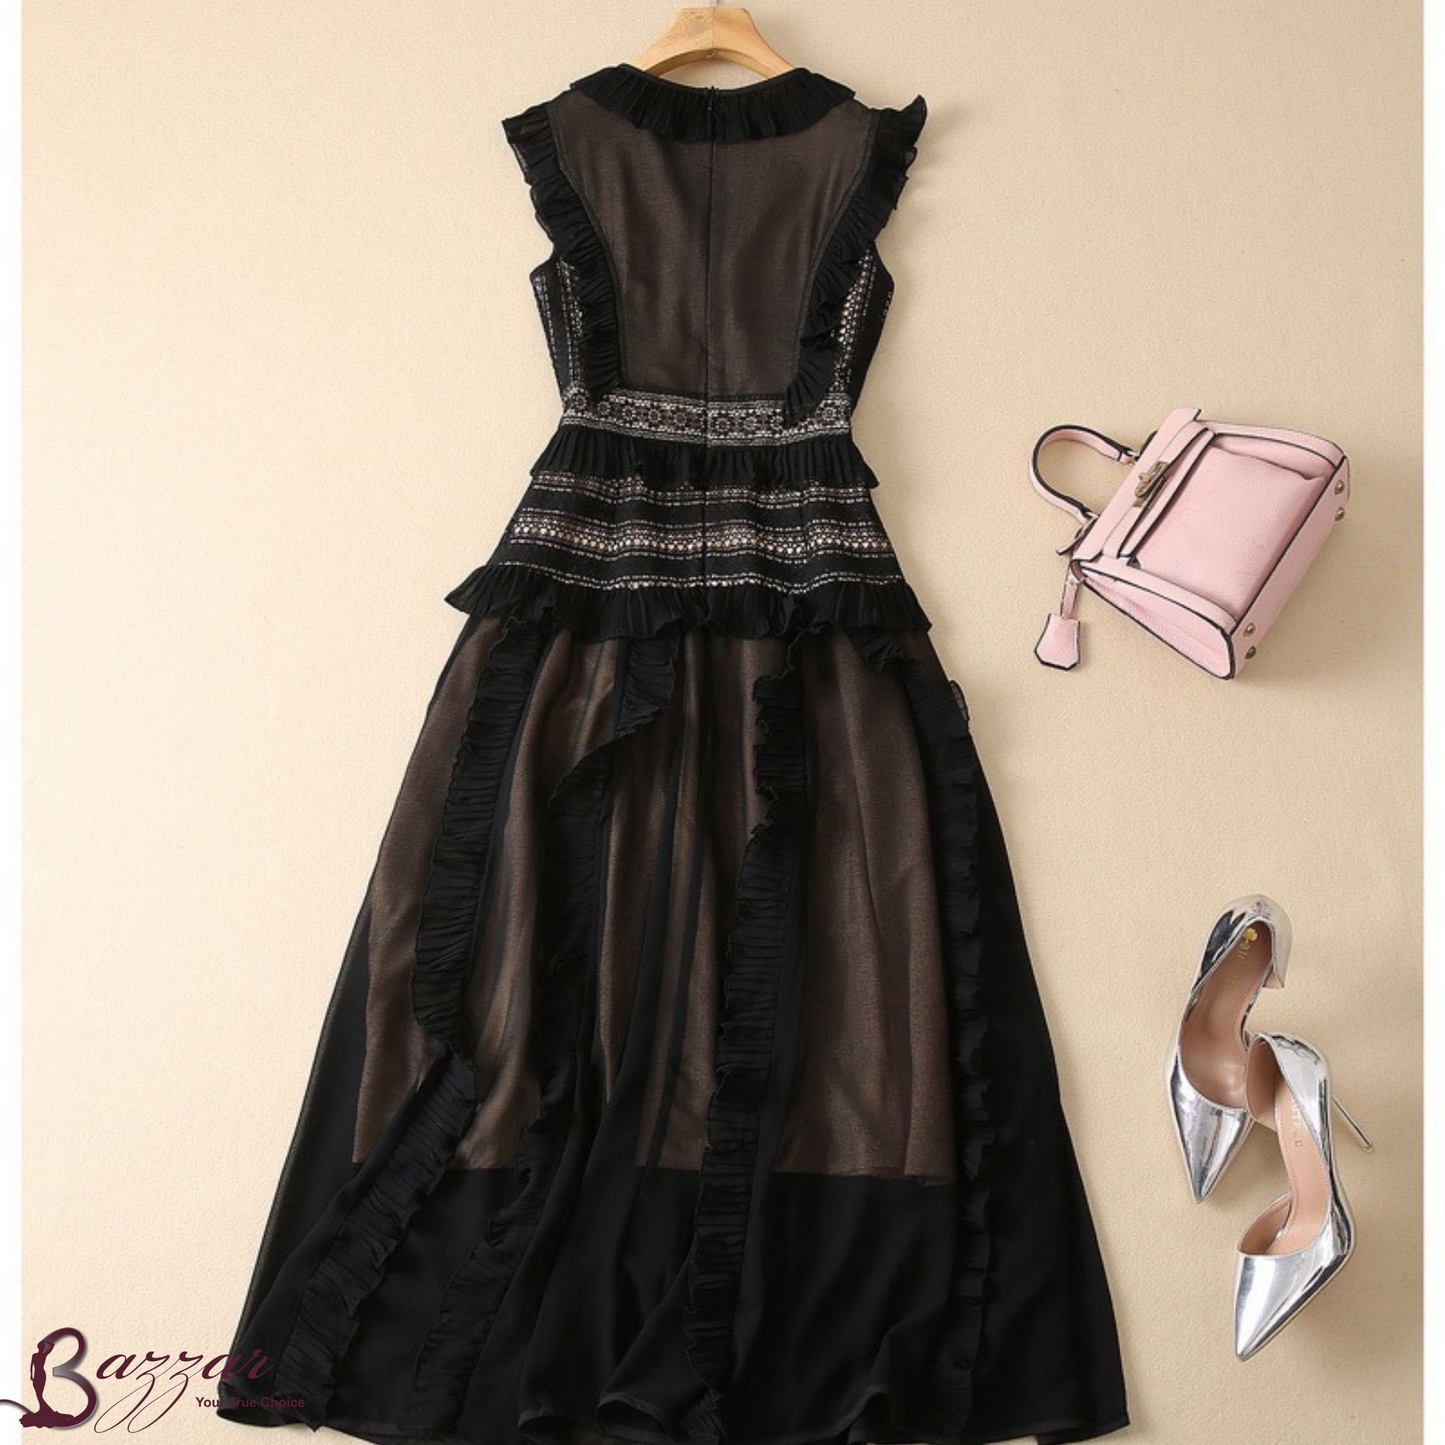 Dress - Black formal